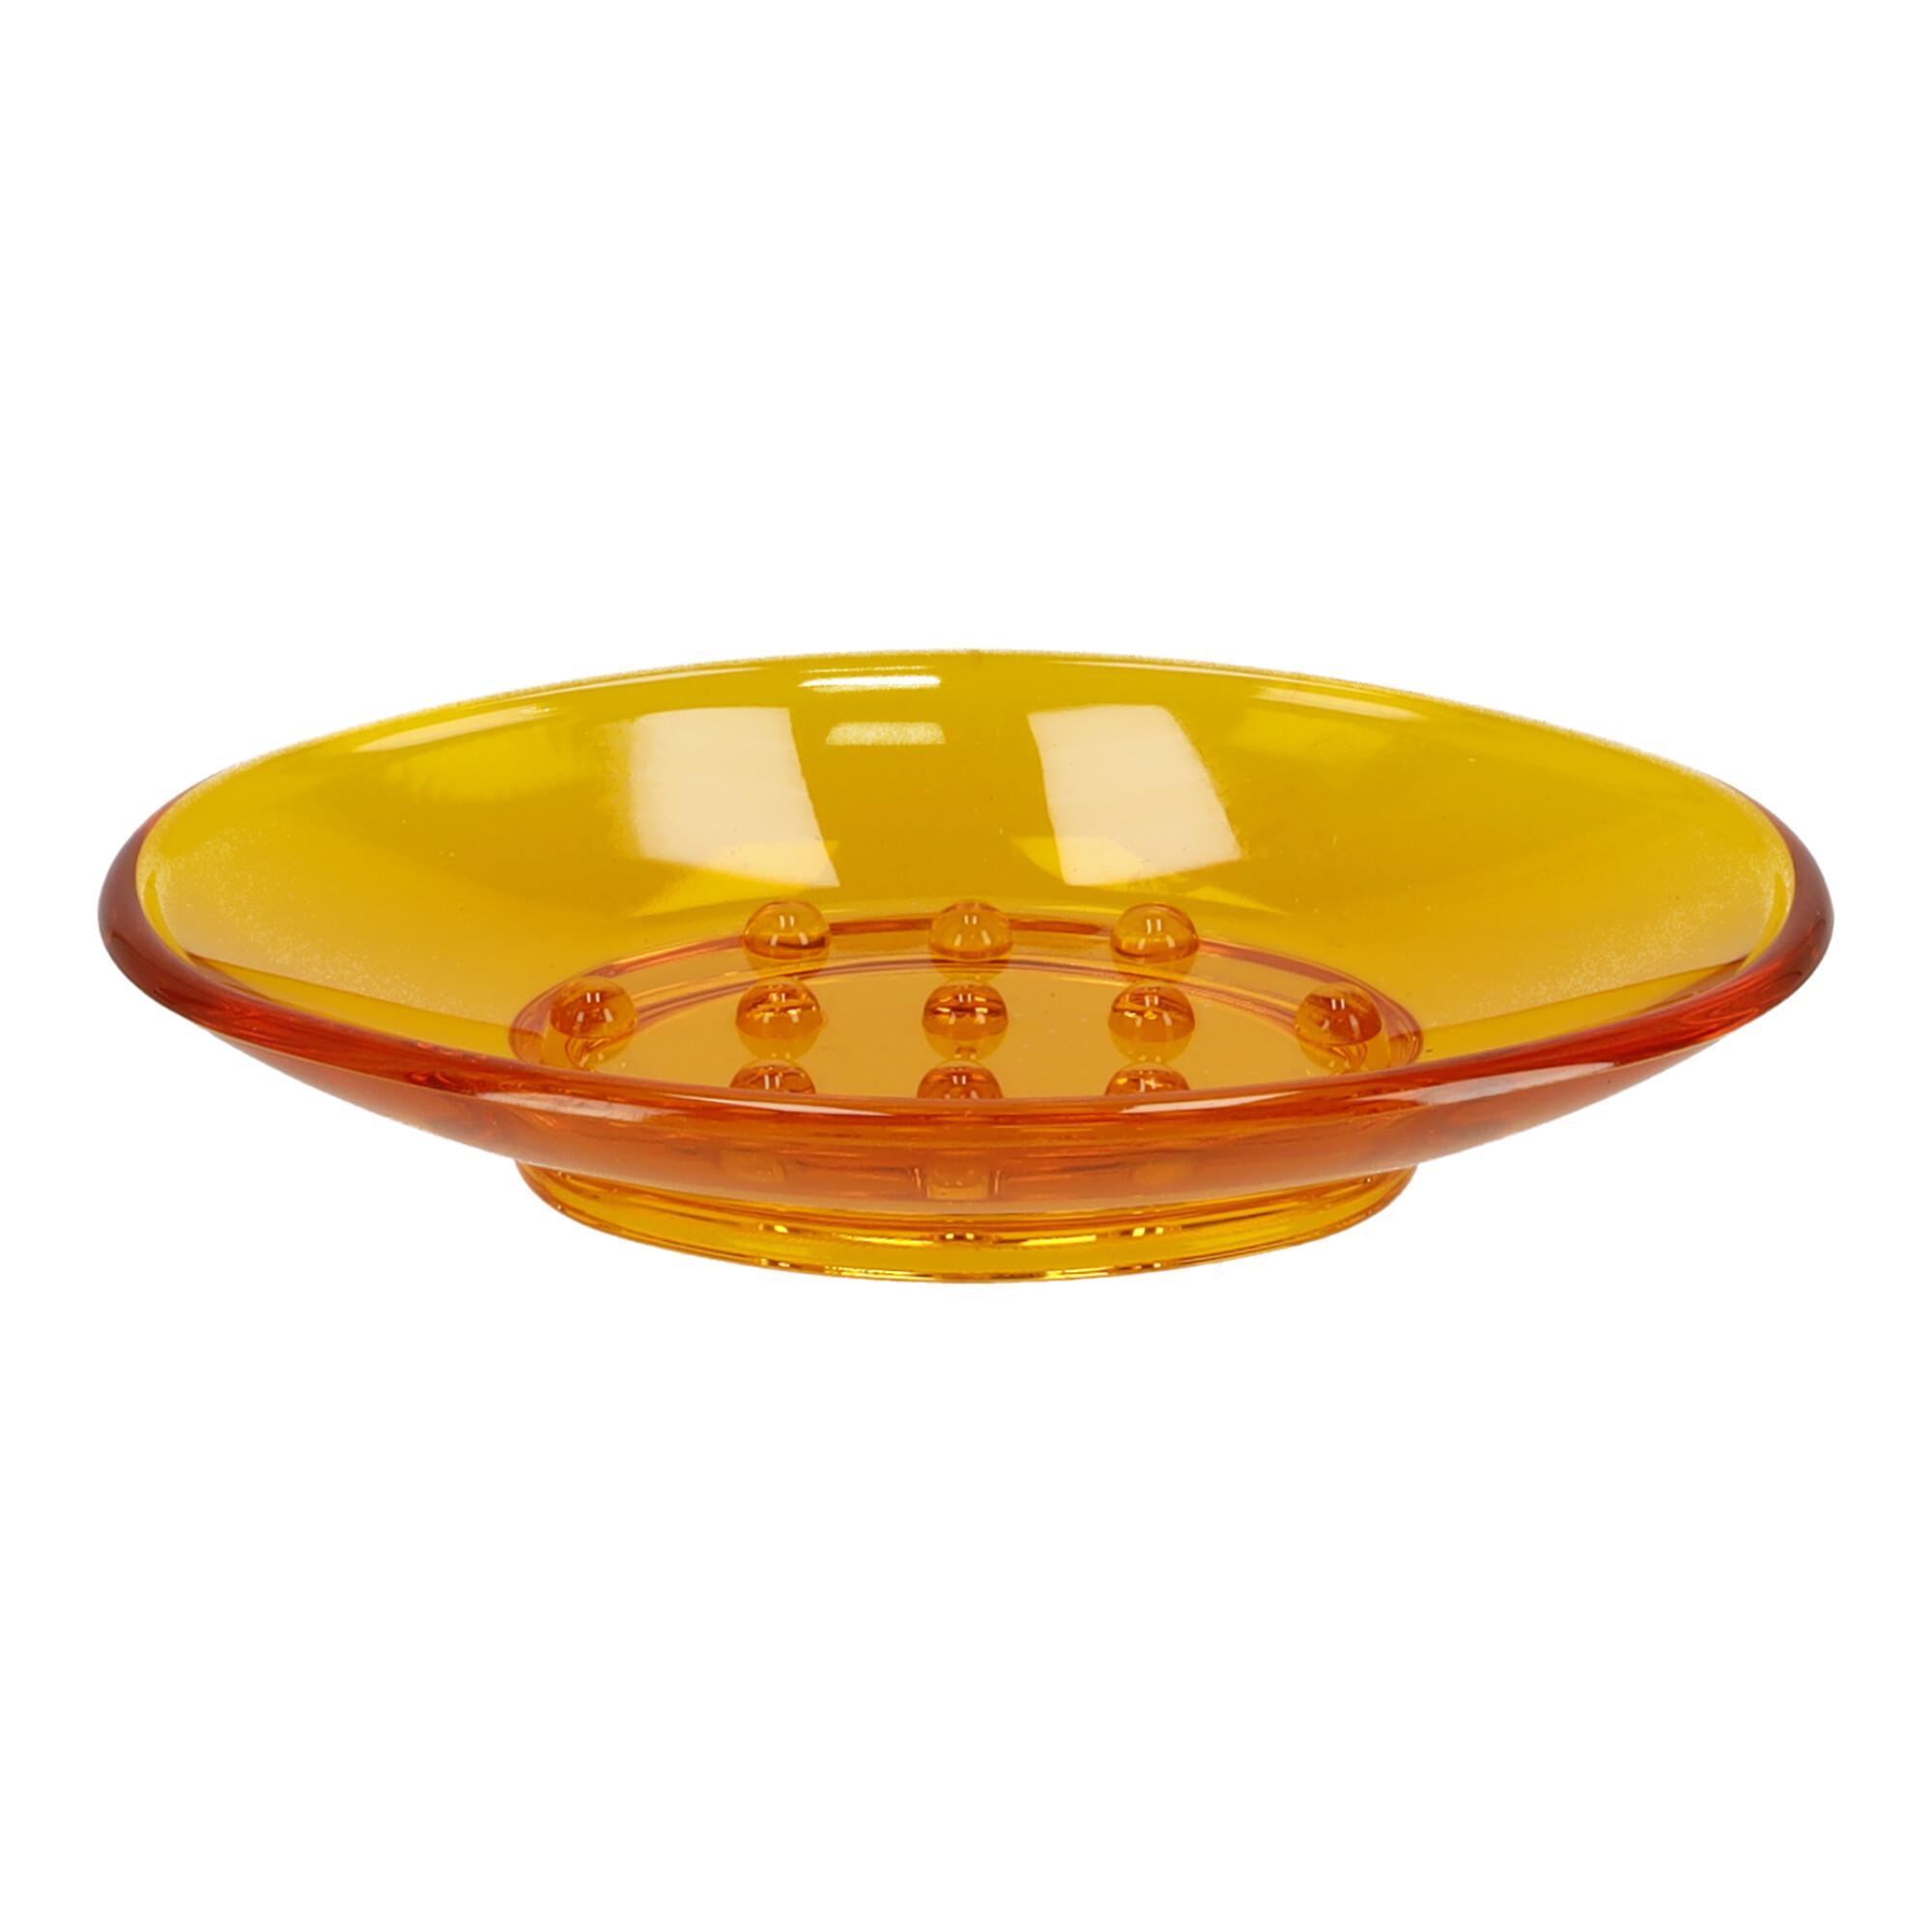 Plastic soap dish, Soap pad - orange